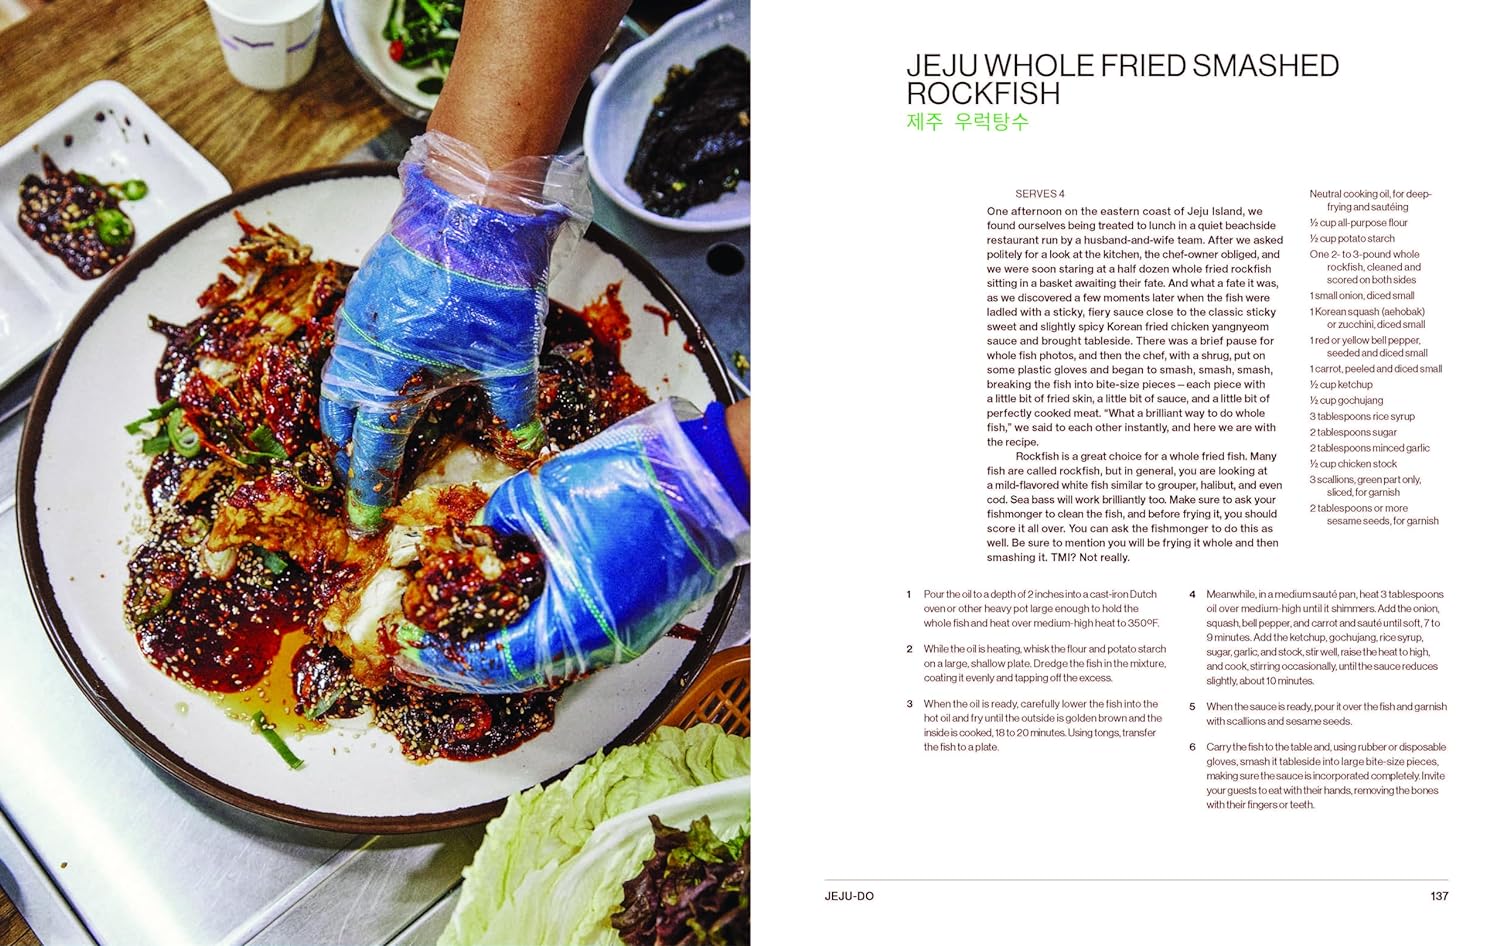 Koreaworld: A Cookbook